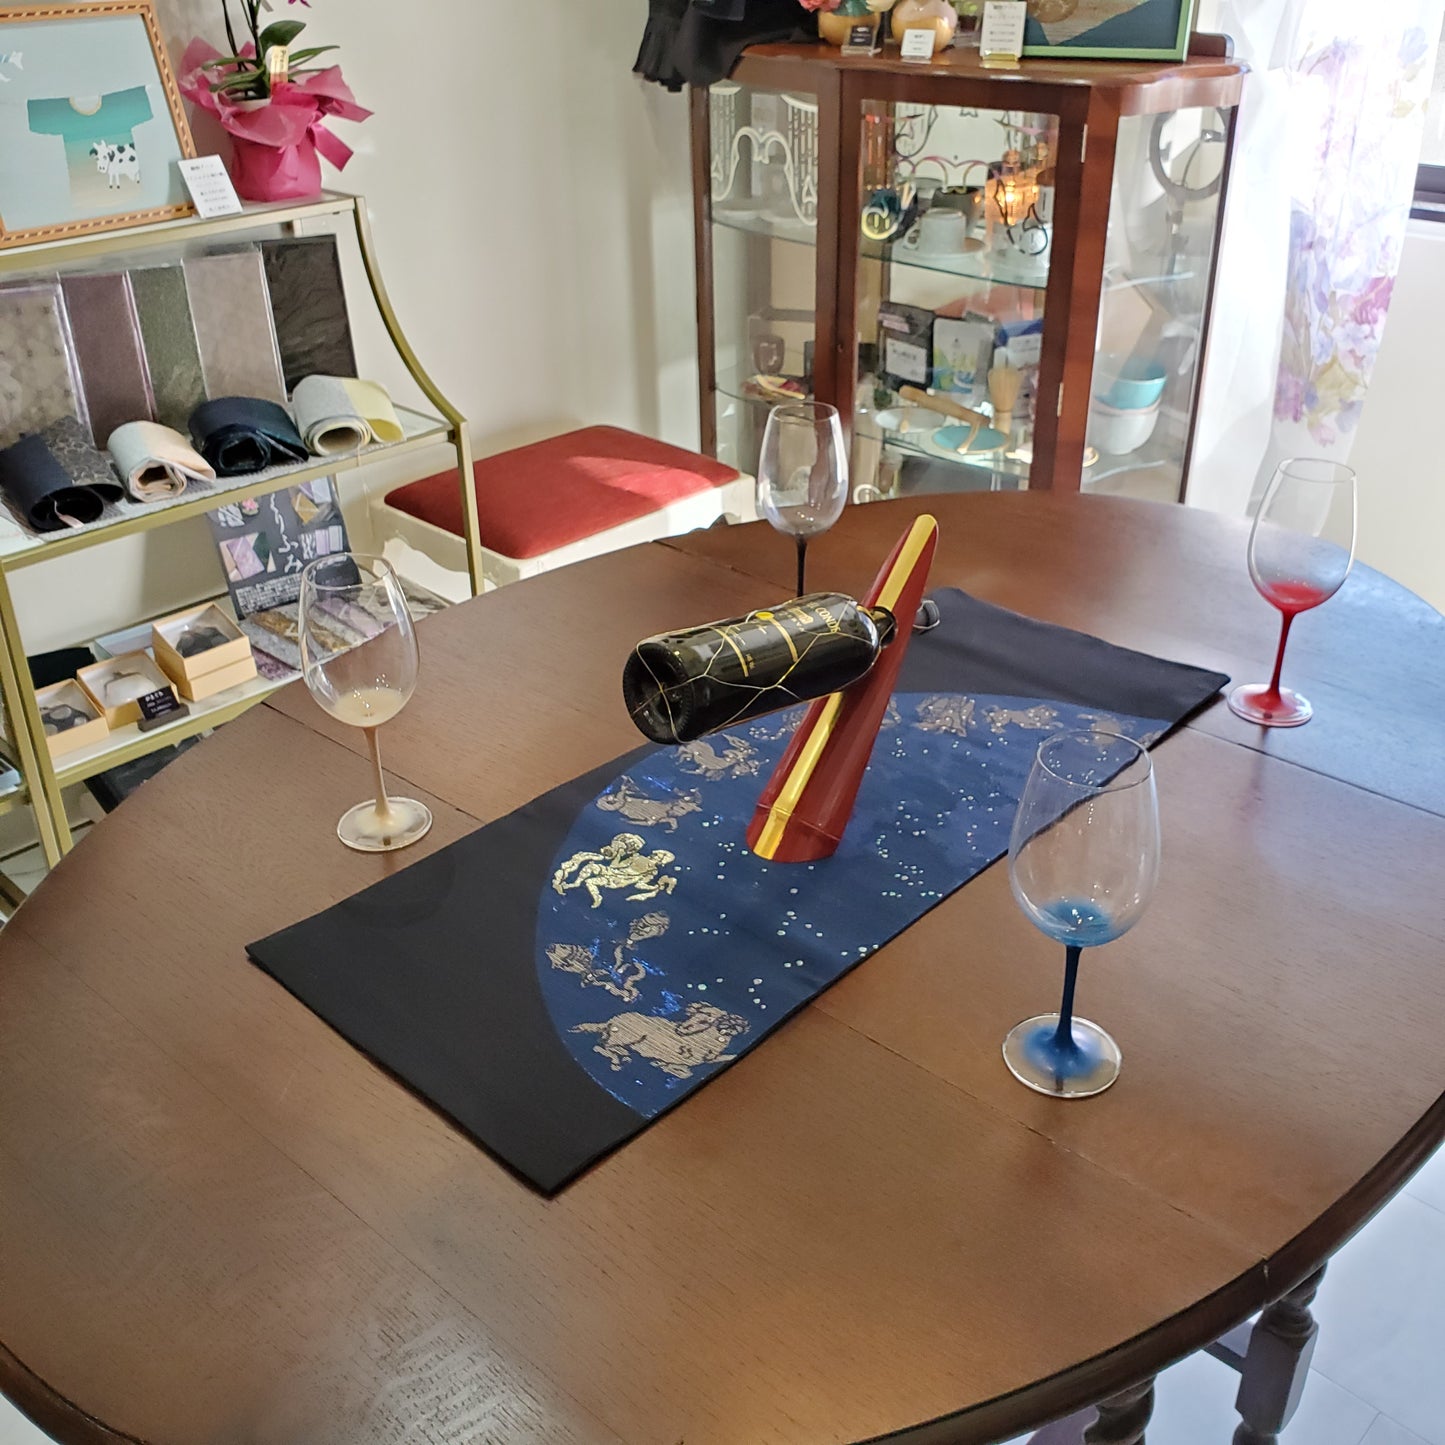 Lacquer glass "Hanahiraku" wine glass, blue